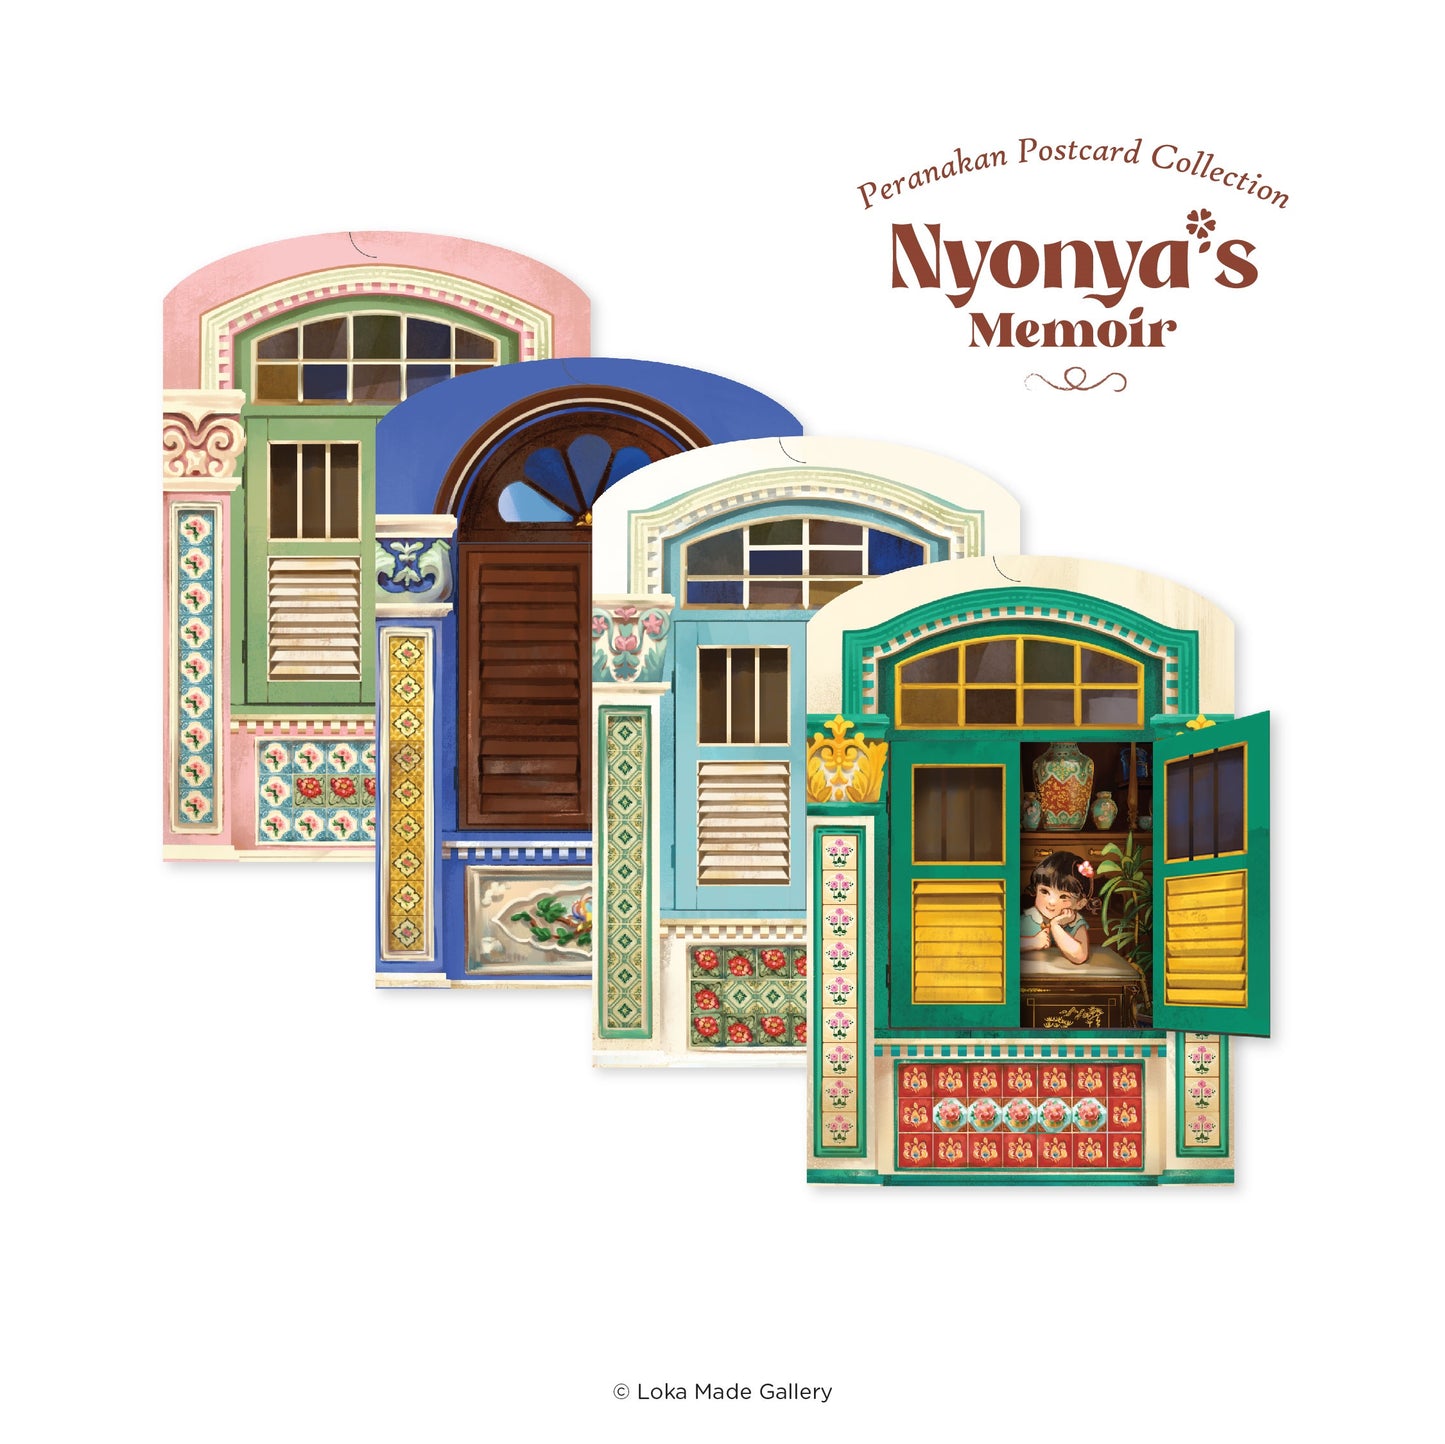 Nyonya’s Memoir Postcard: The Daydreamer